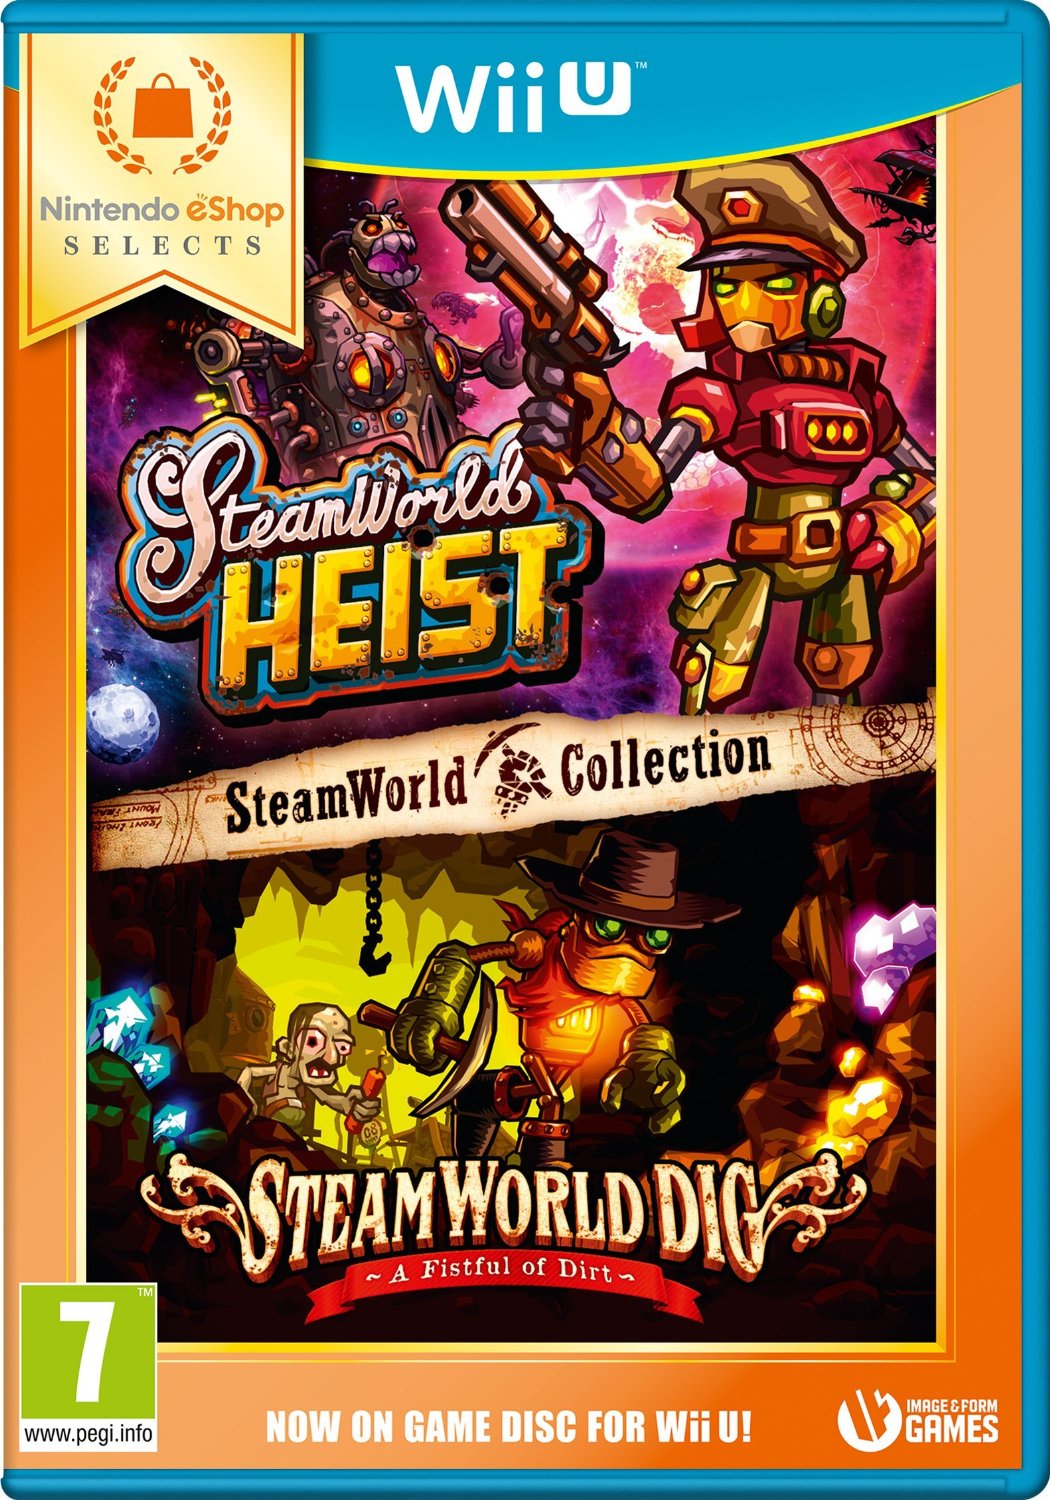 SteamWorld Collection: SteamWorld Heist + SteamWorld Dig eShop Selects (Wiiu), Image & Form